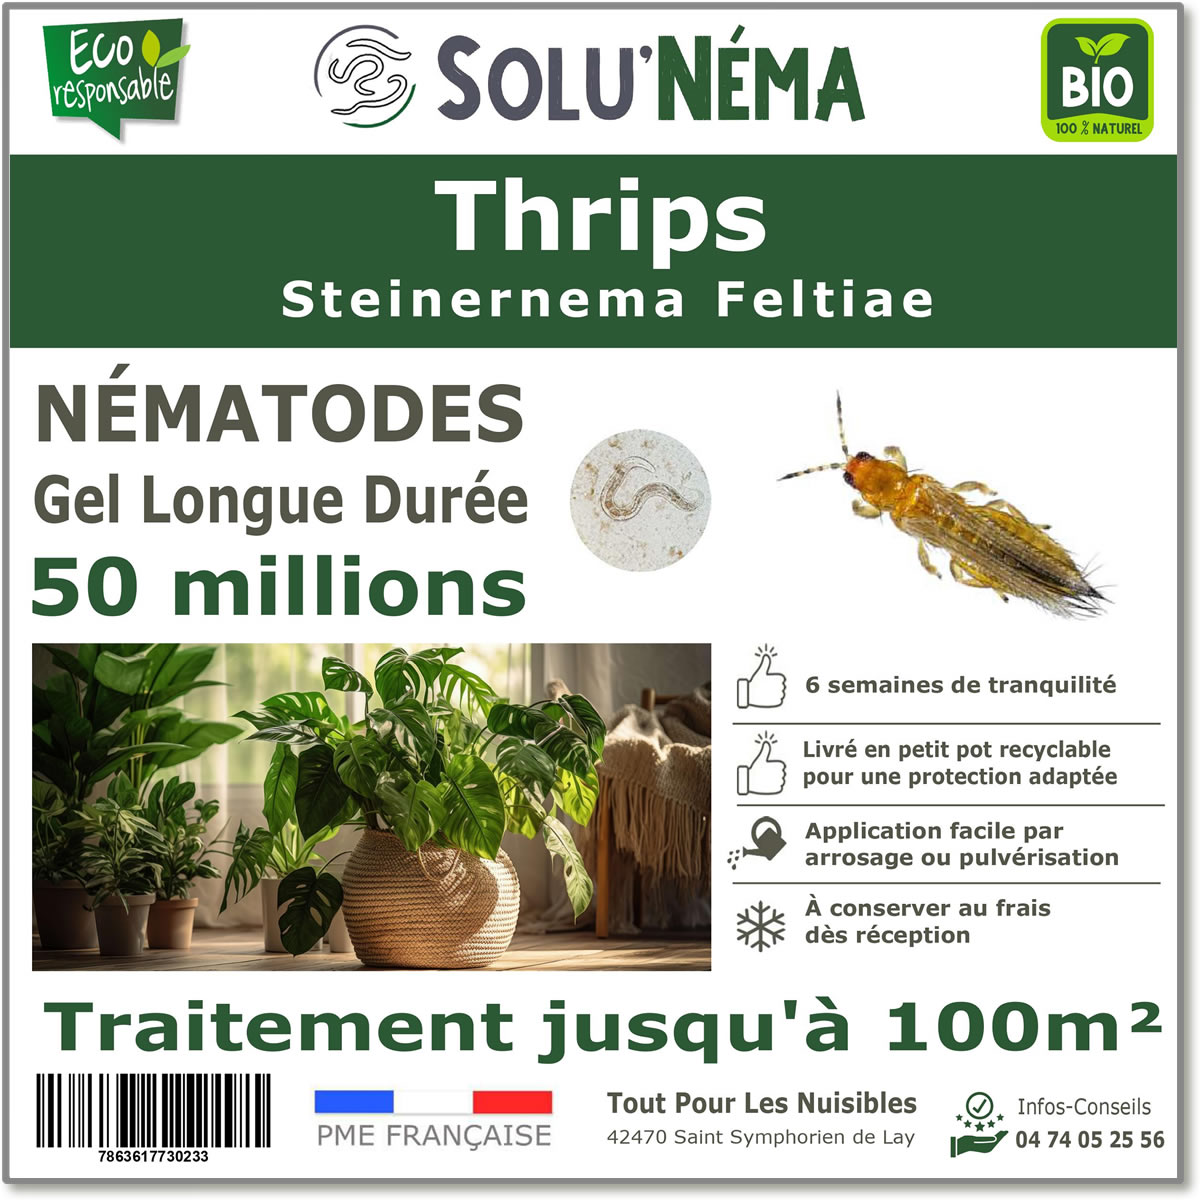 Nematodes (SF) Solunema for Thrips 50 million SF